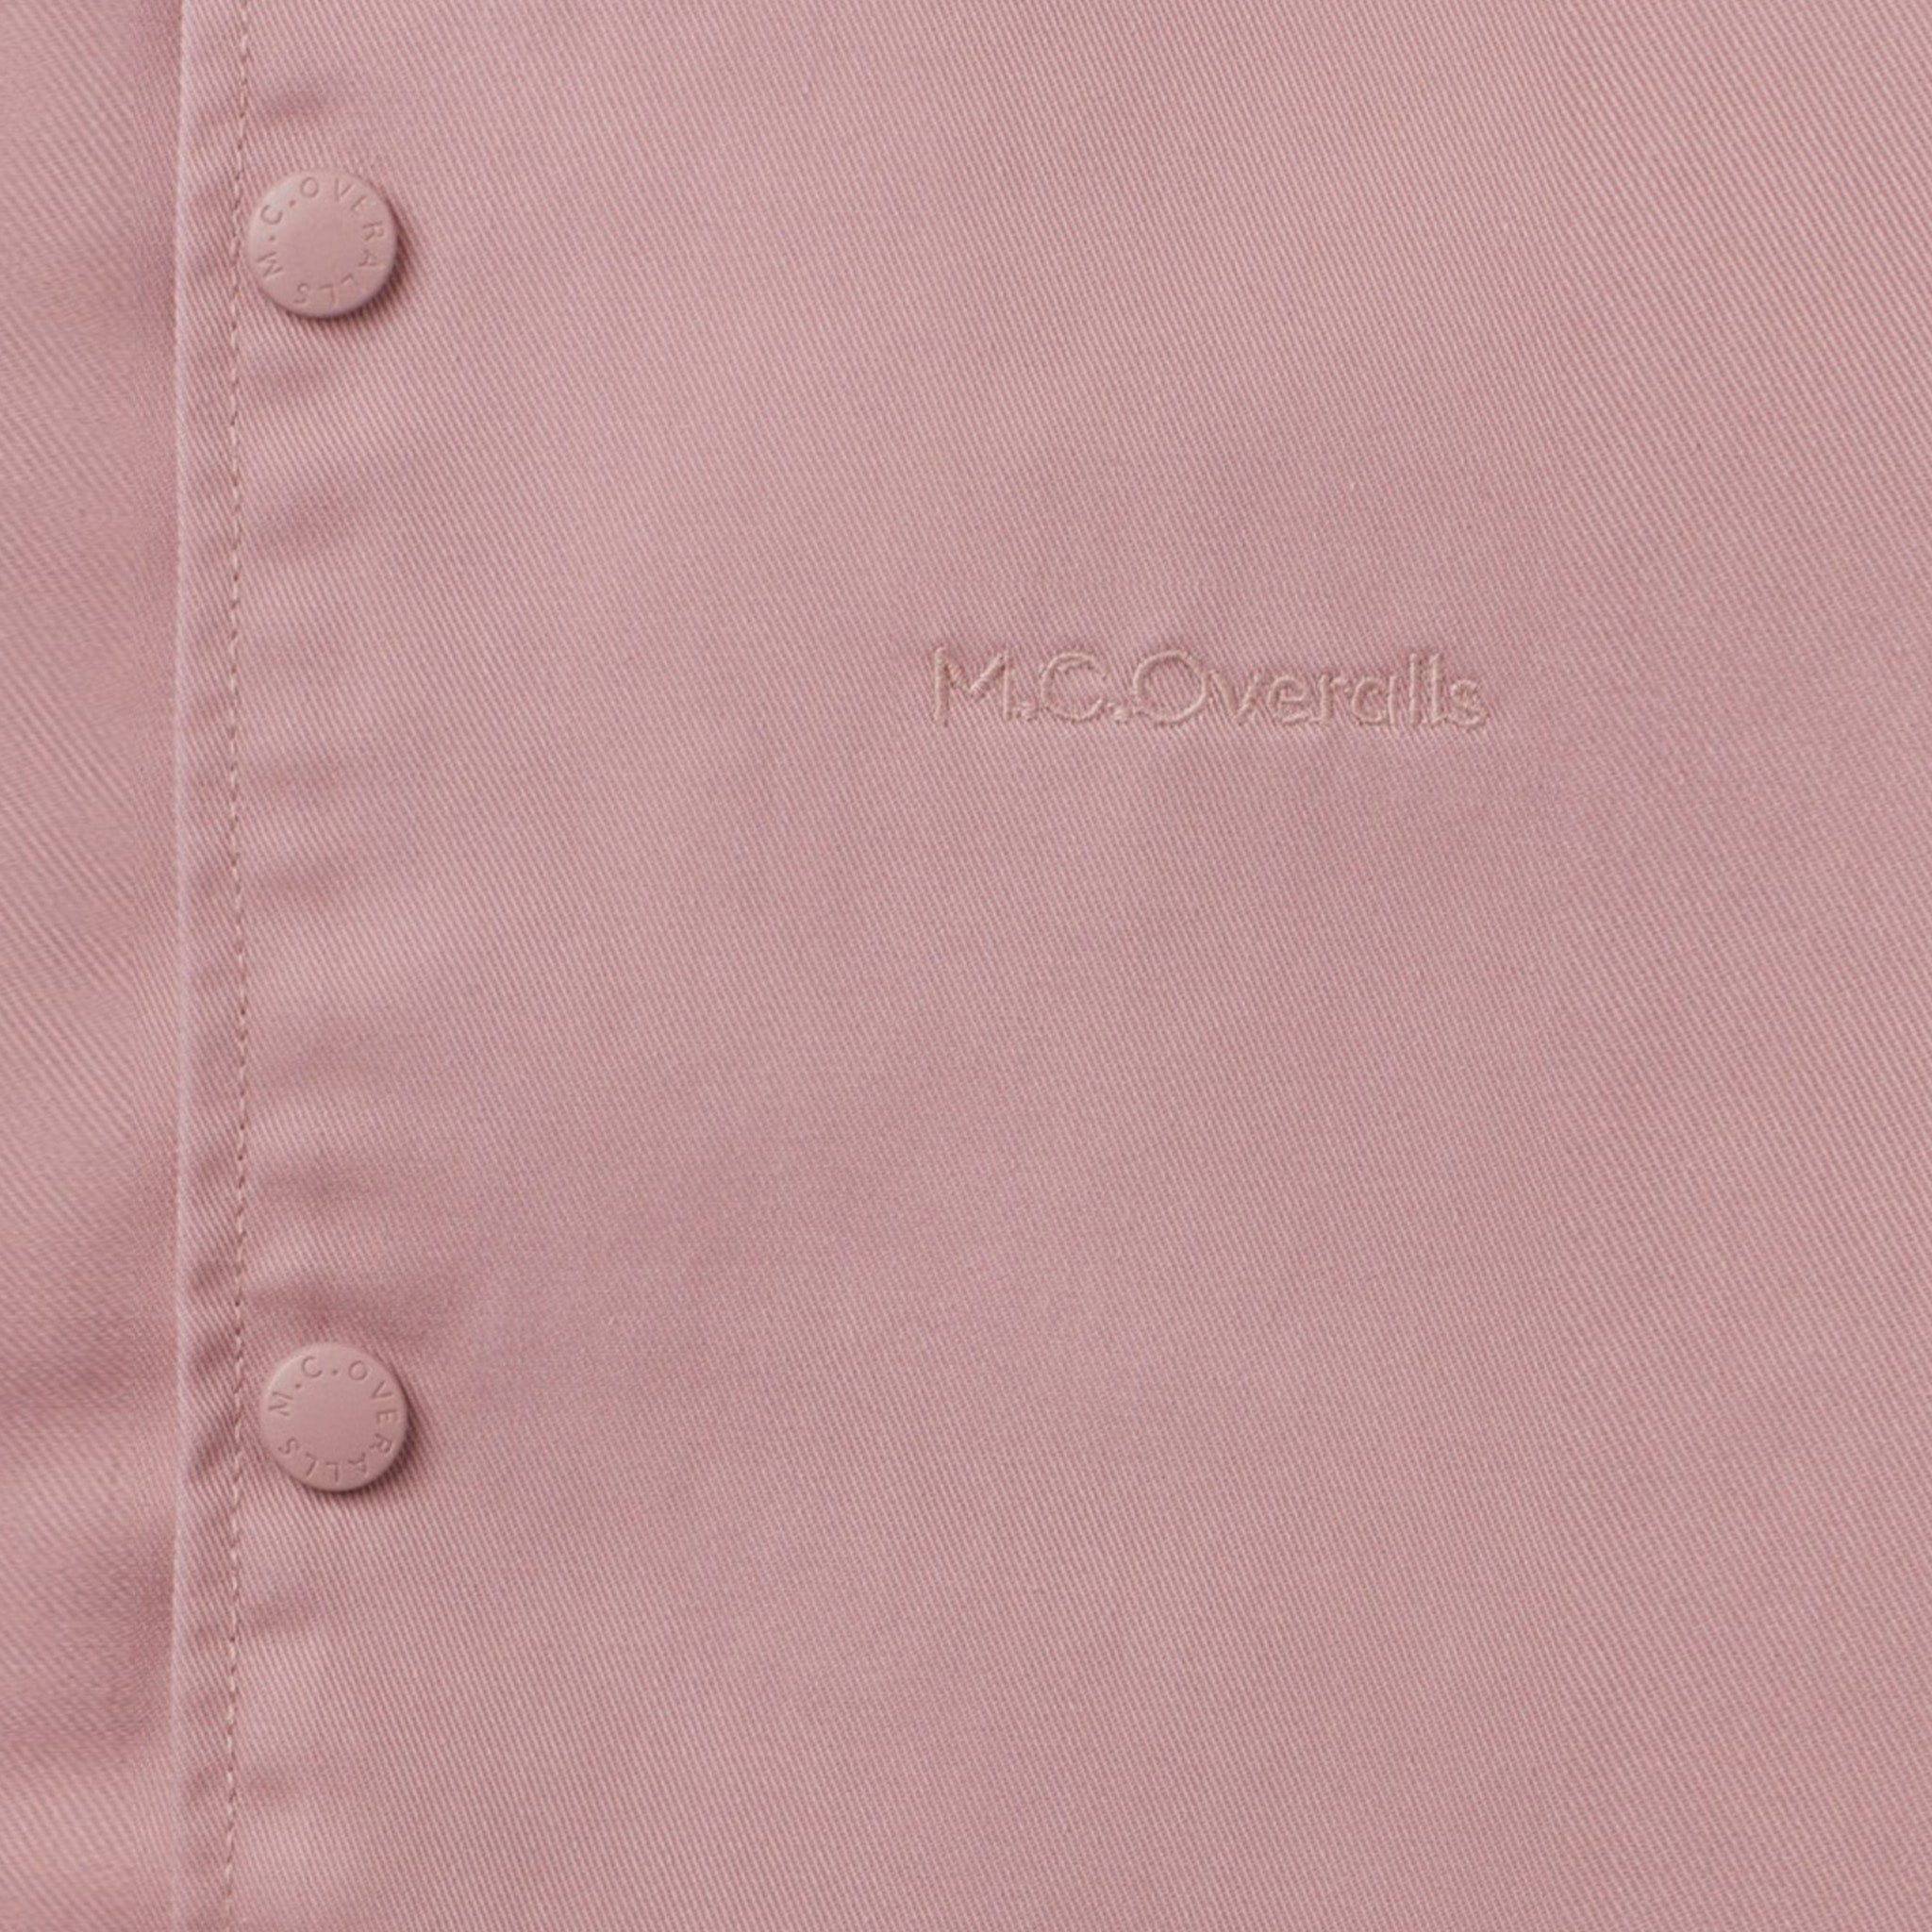 M.C.O&#39;s Logo on Pink Polycotton Coach Jacket. 